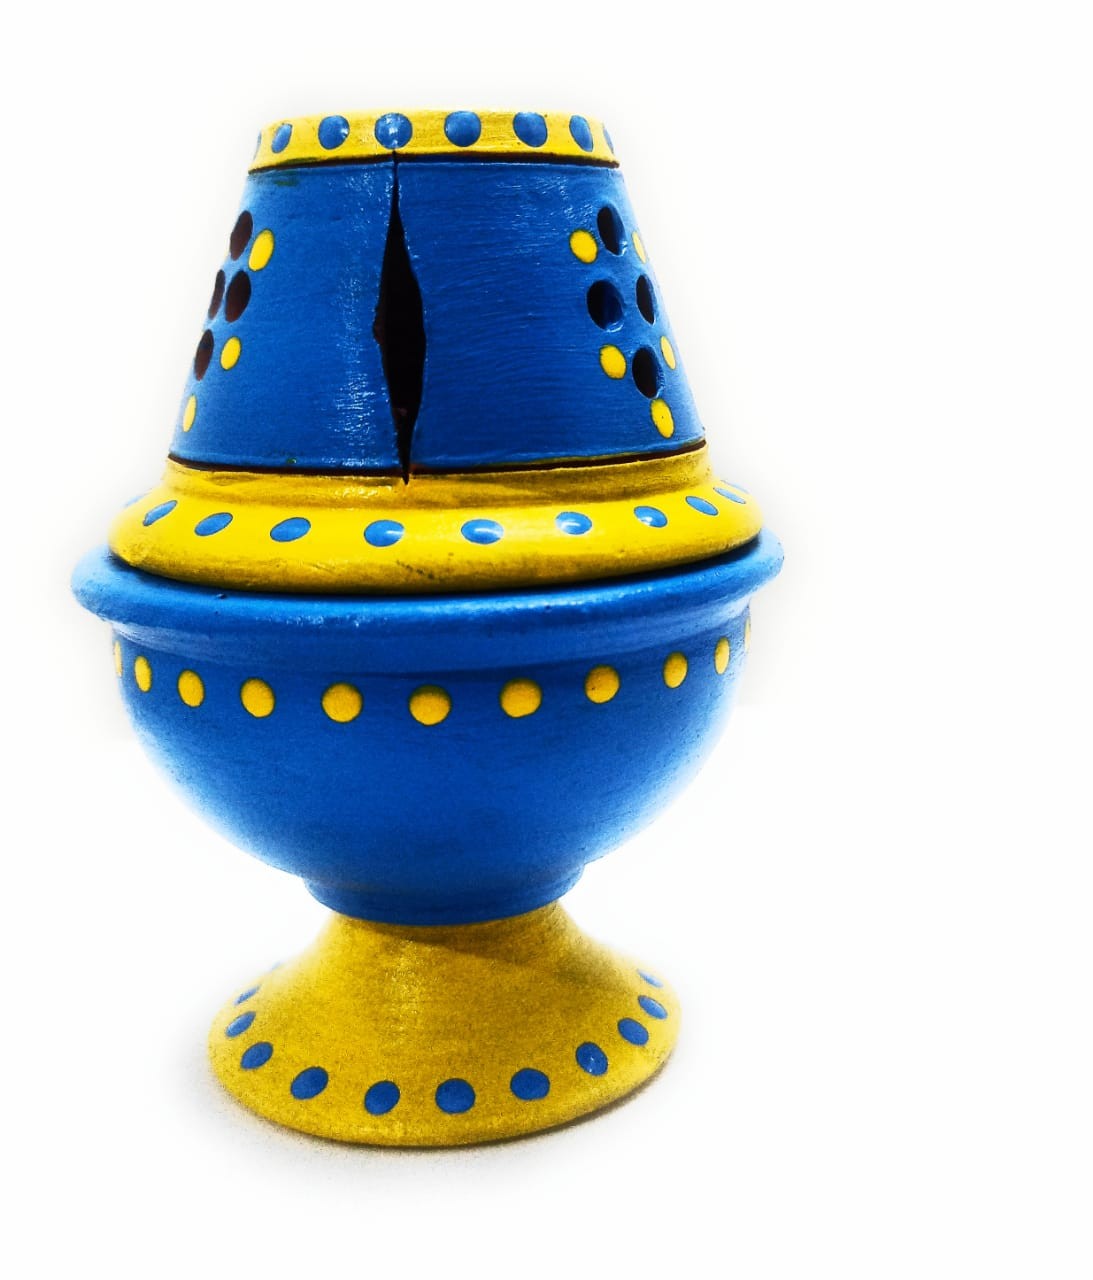 Premium Beautifully Colored Traditional Clay Lanterns/Diya/Lamp-sky blue and lemon yellow